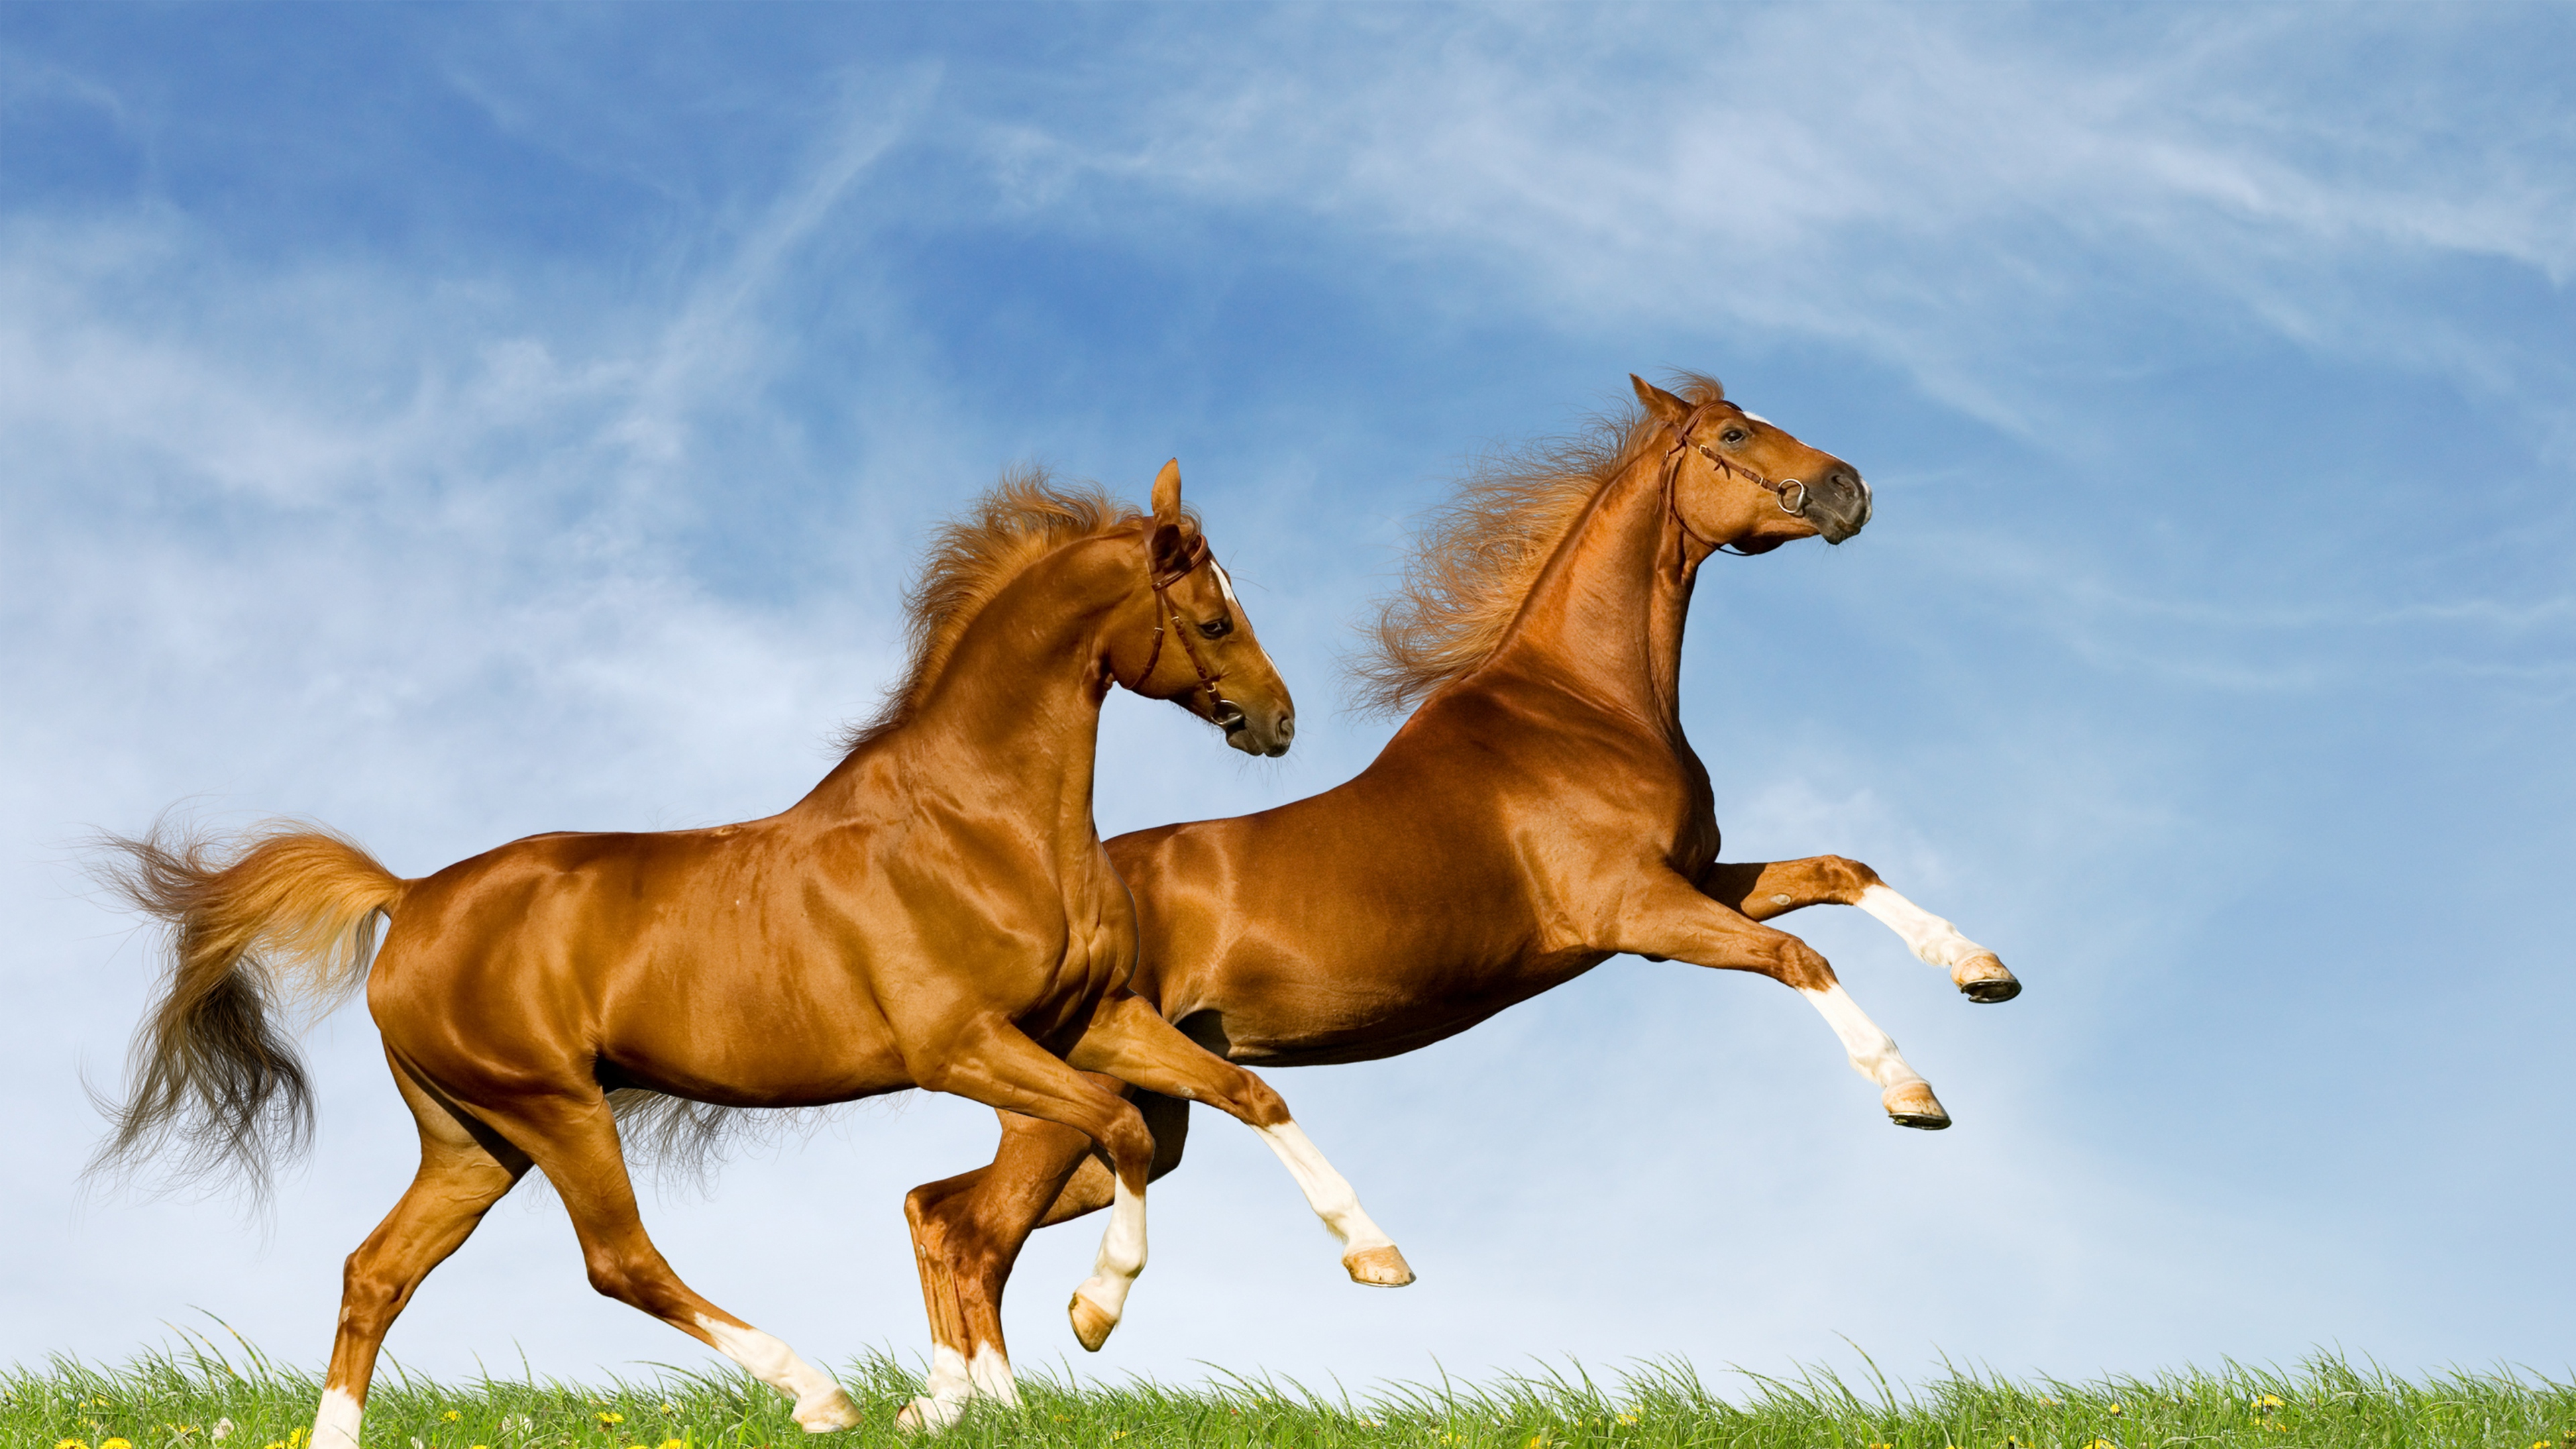 Horse 4K Ultra HD Wallpaper | Horse Couple 4k Ultra HD Wallpapers ...